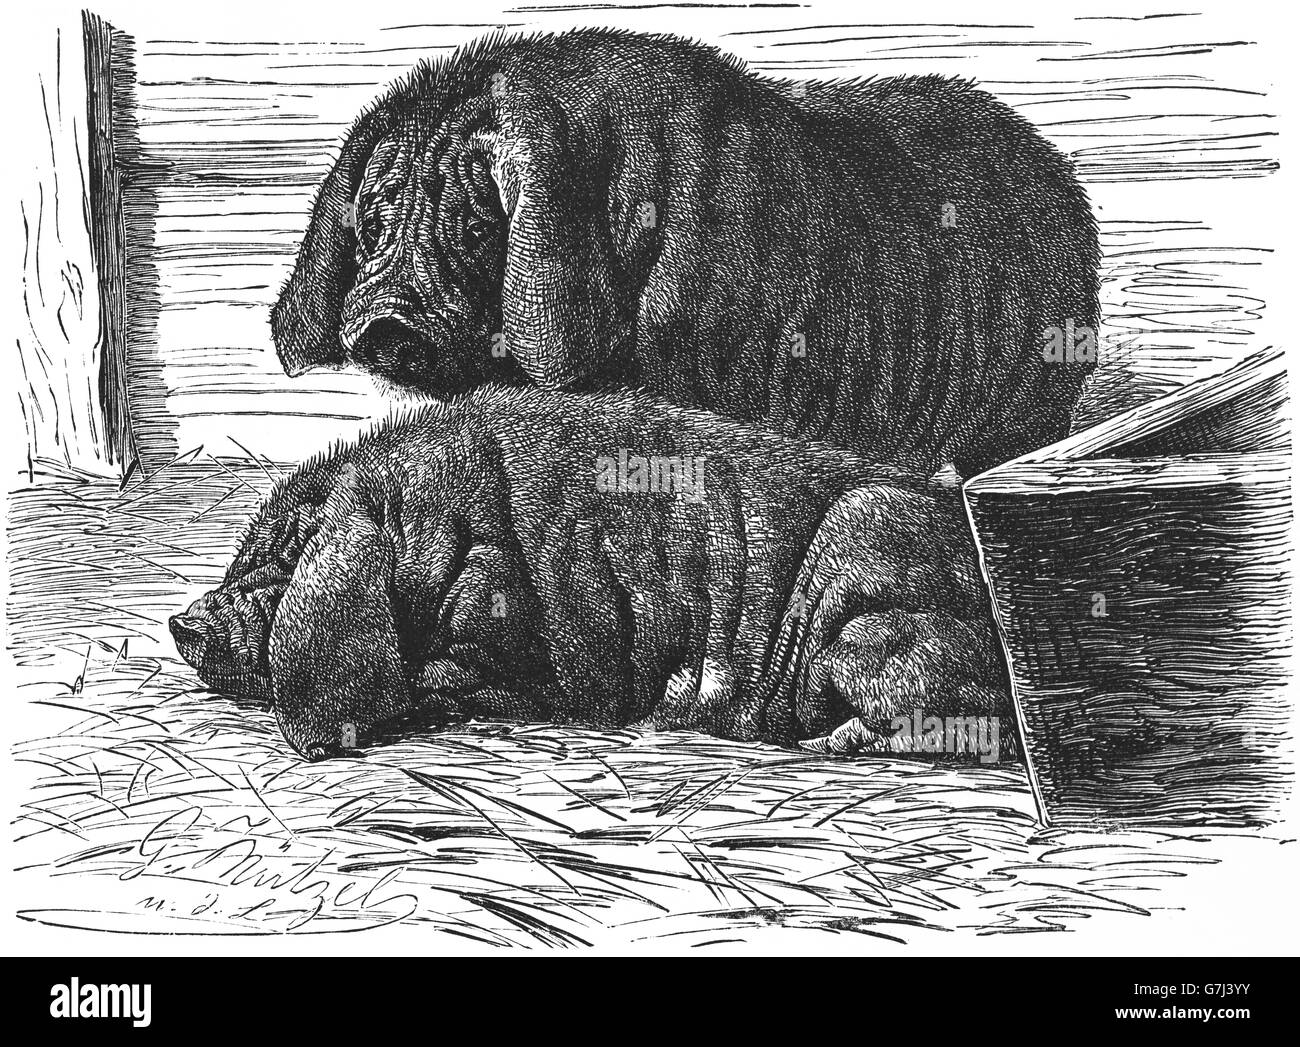 Domestic pig, Sus scrofa domesticus, Sus domesticus, swine, hog, illustration from book dated 1904 Stock Photo